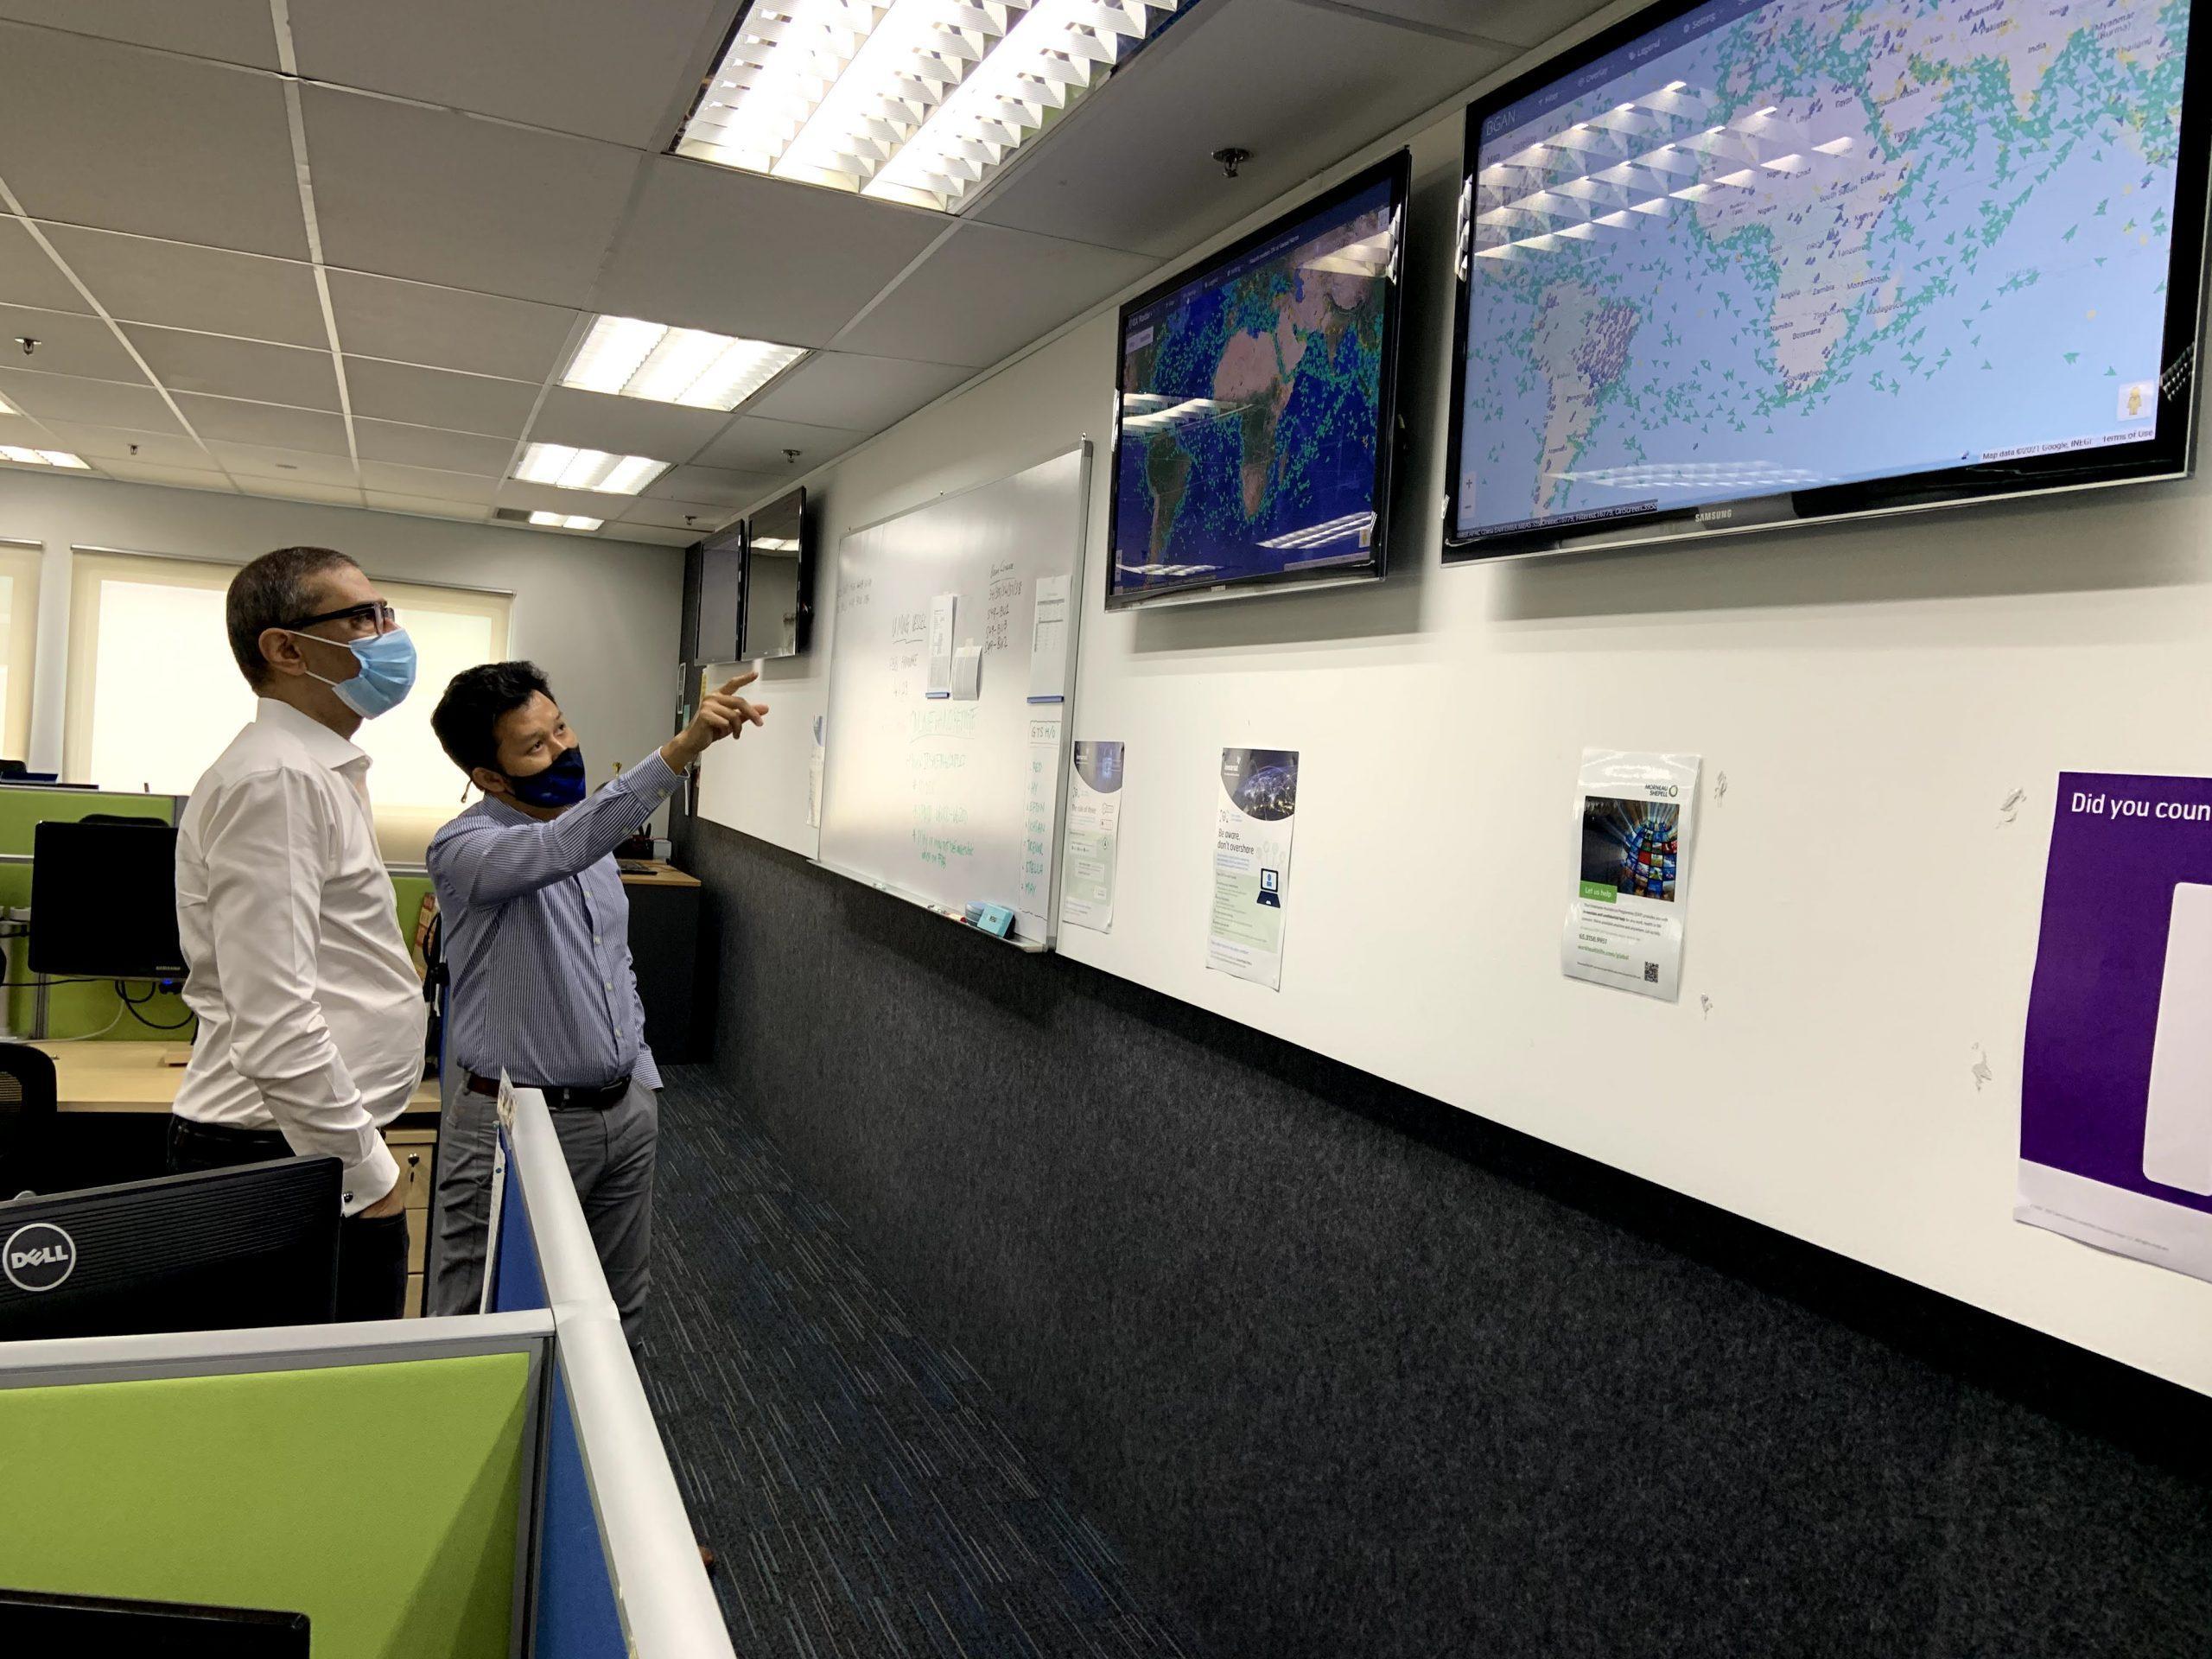 Inmarsat CEO Rajeev Suri Visits Singapore Facility